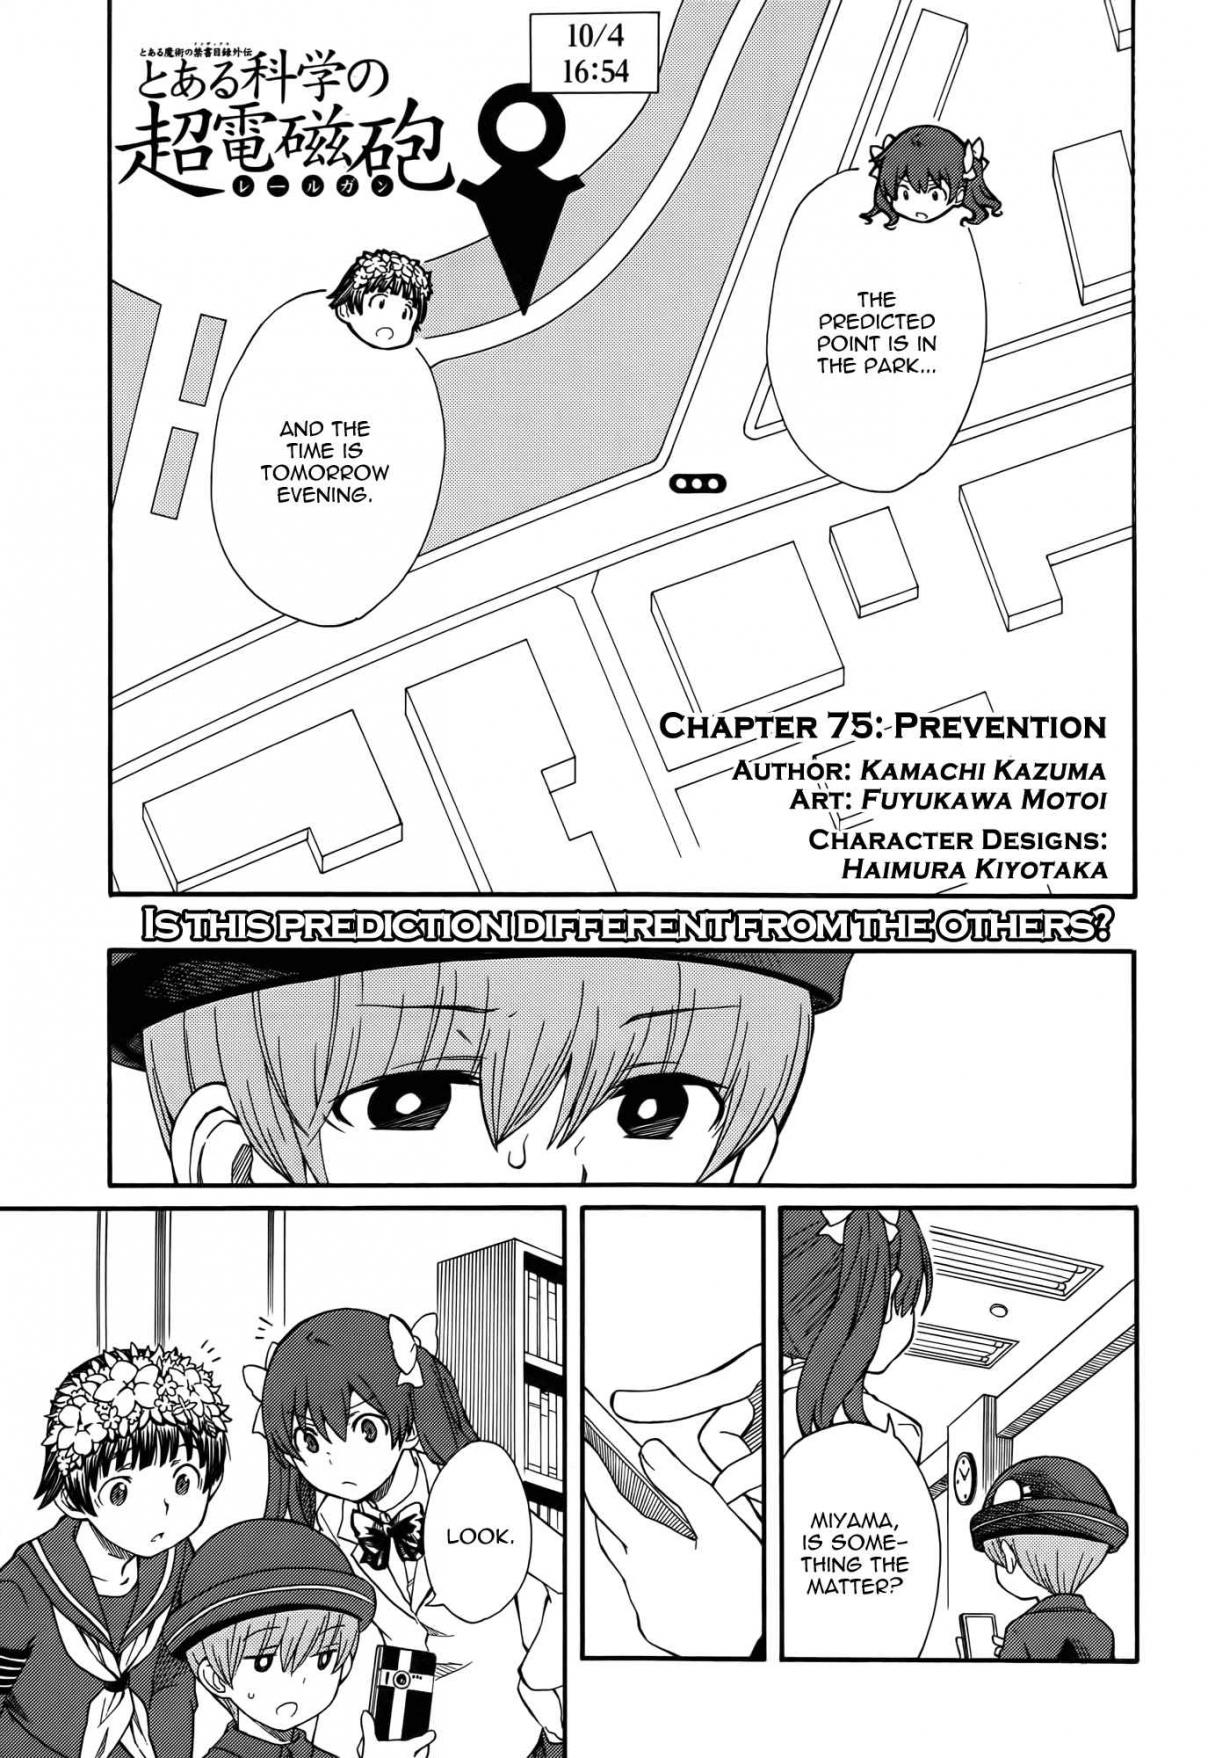 Toaru Kagaku no Choudenjihou Vol. 11 Ch. 75 Prevention